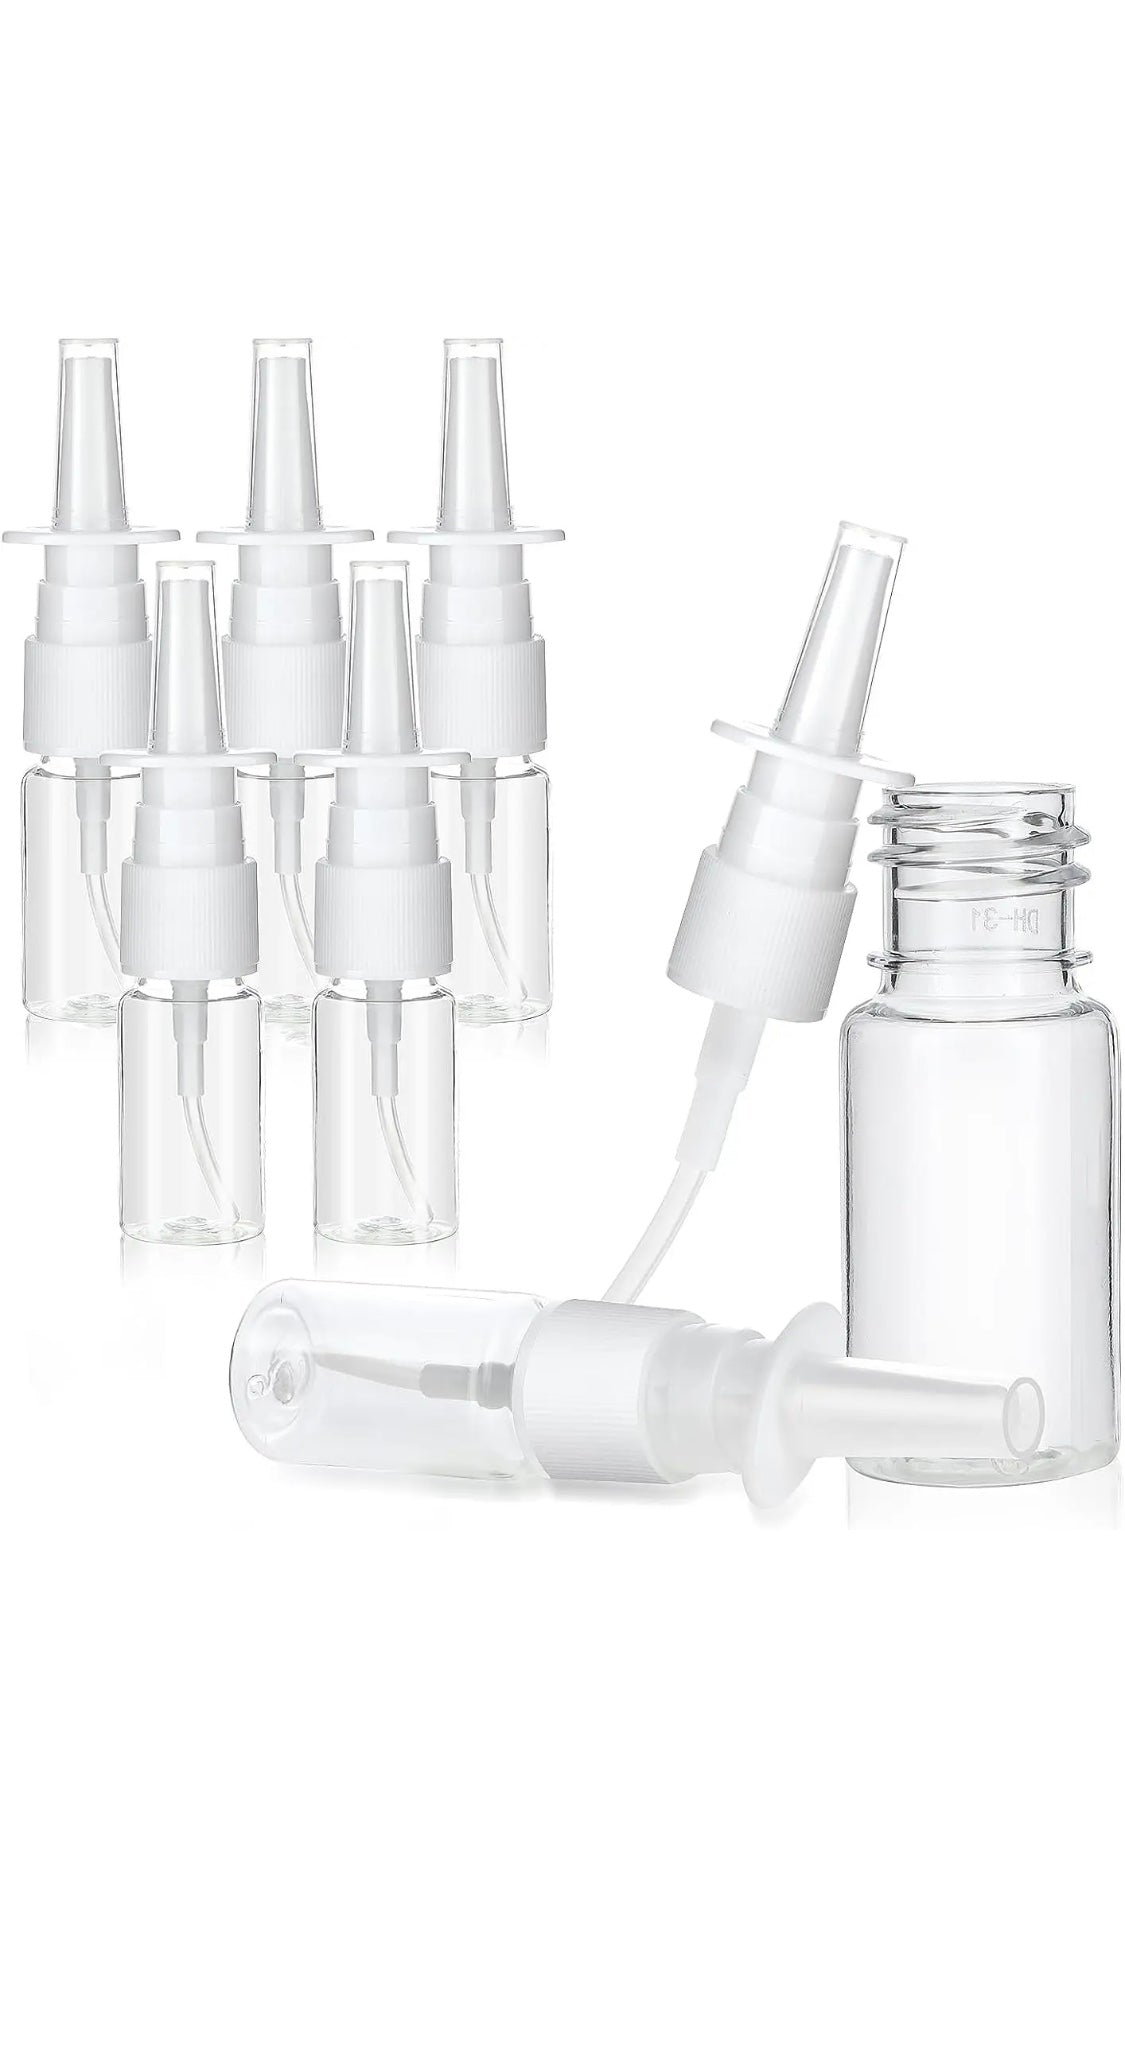 10ml Clear Nasal Spray Bottles - 10,000 PCS